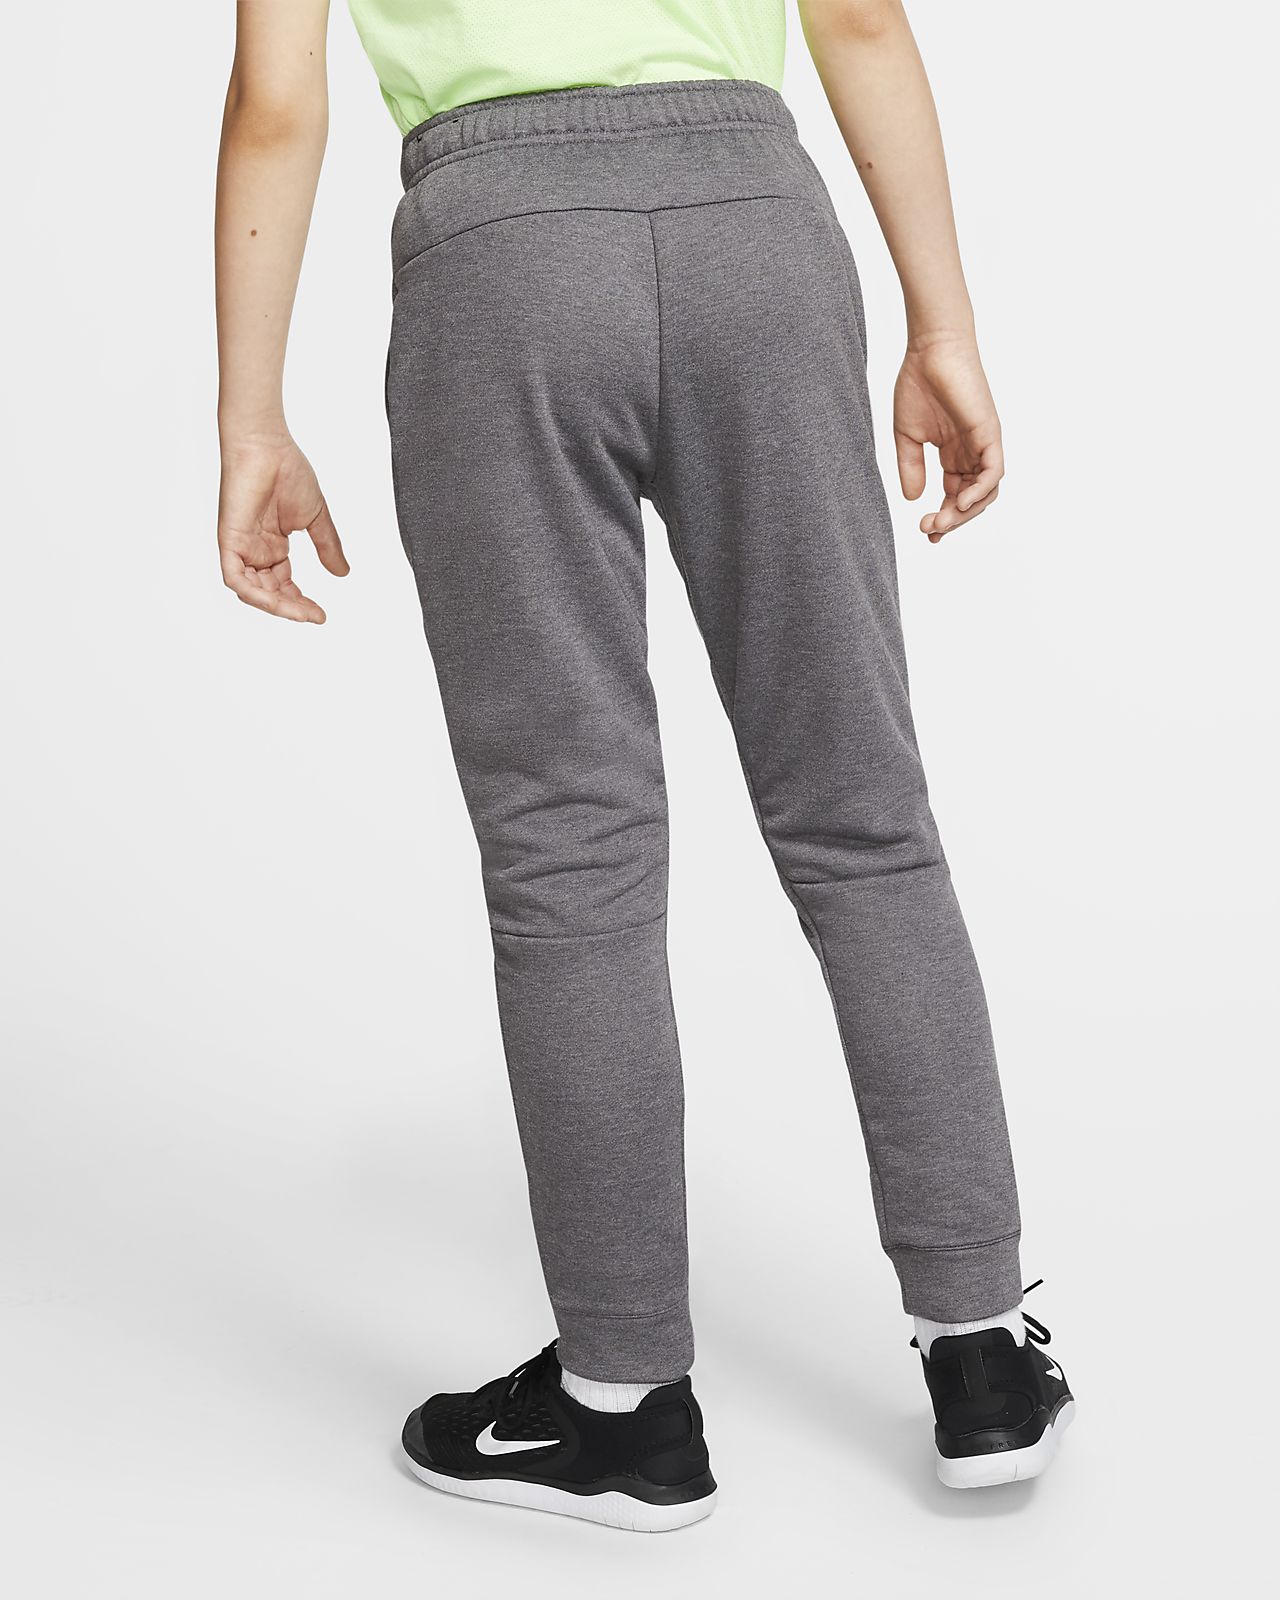 Nike Boys DRI-FIT Training Pant XL Dark Grey